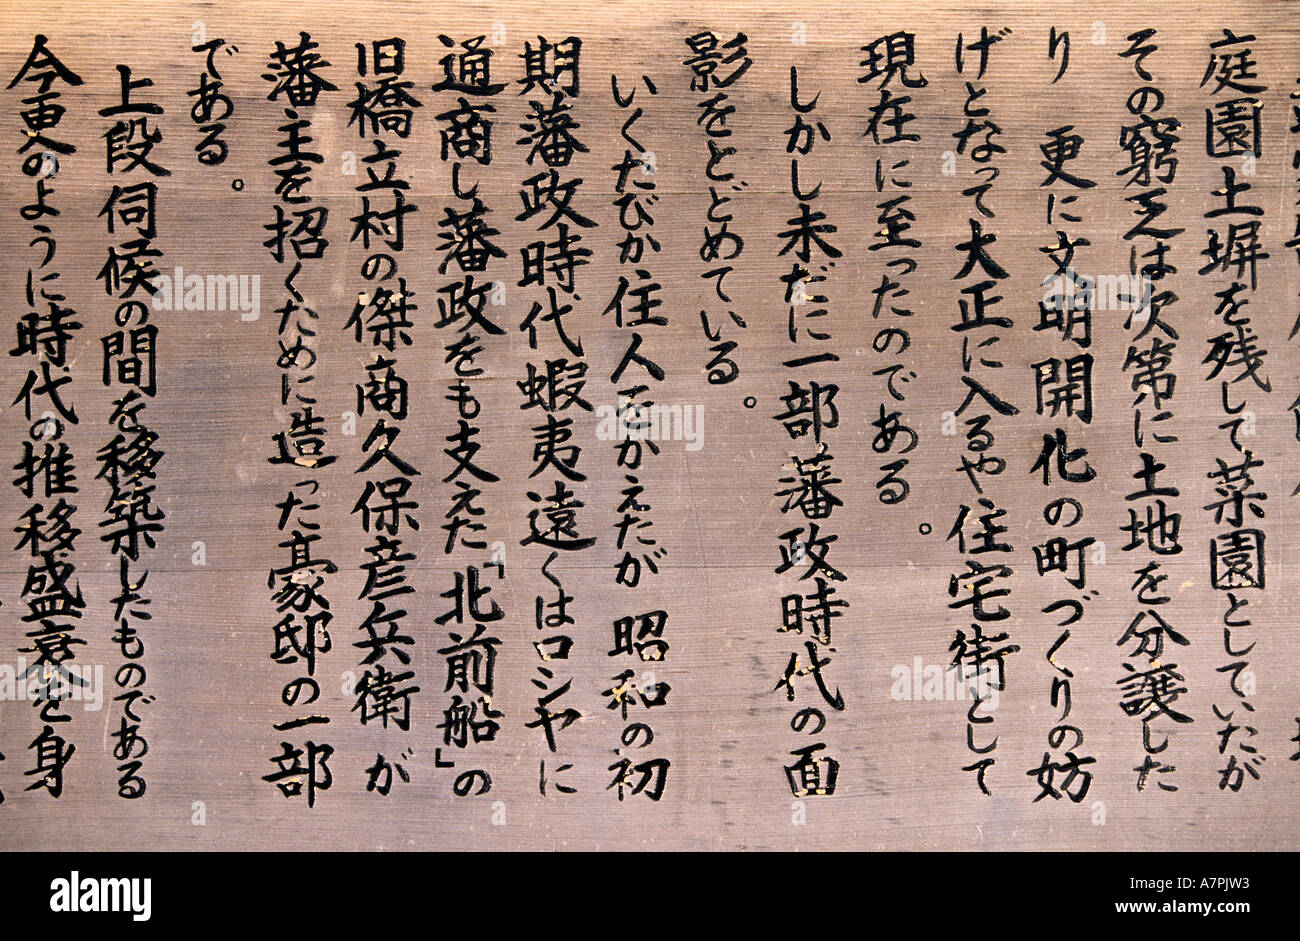 Japan, Kanjis (japanische Schrift) Stockfoto